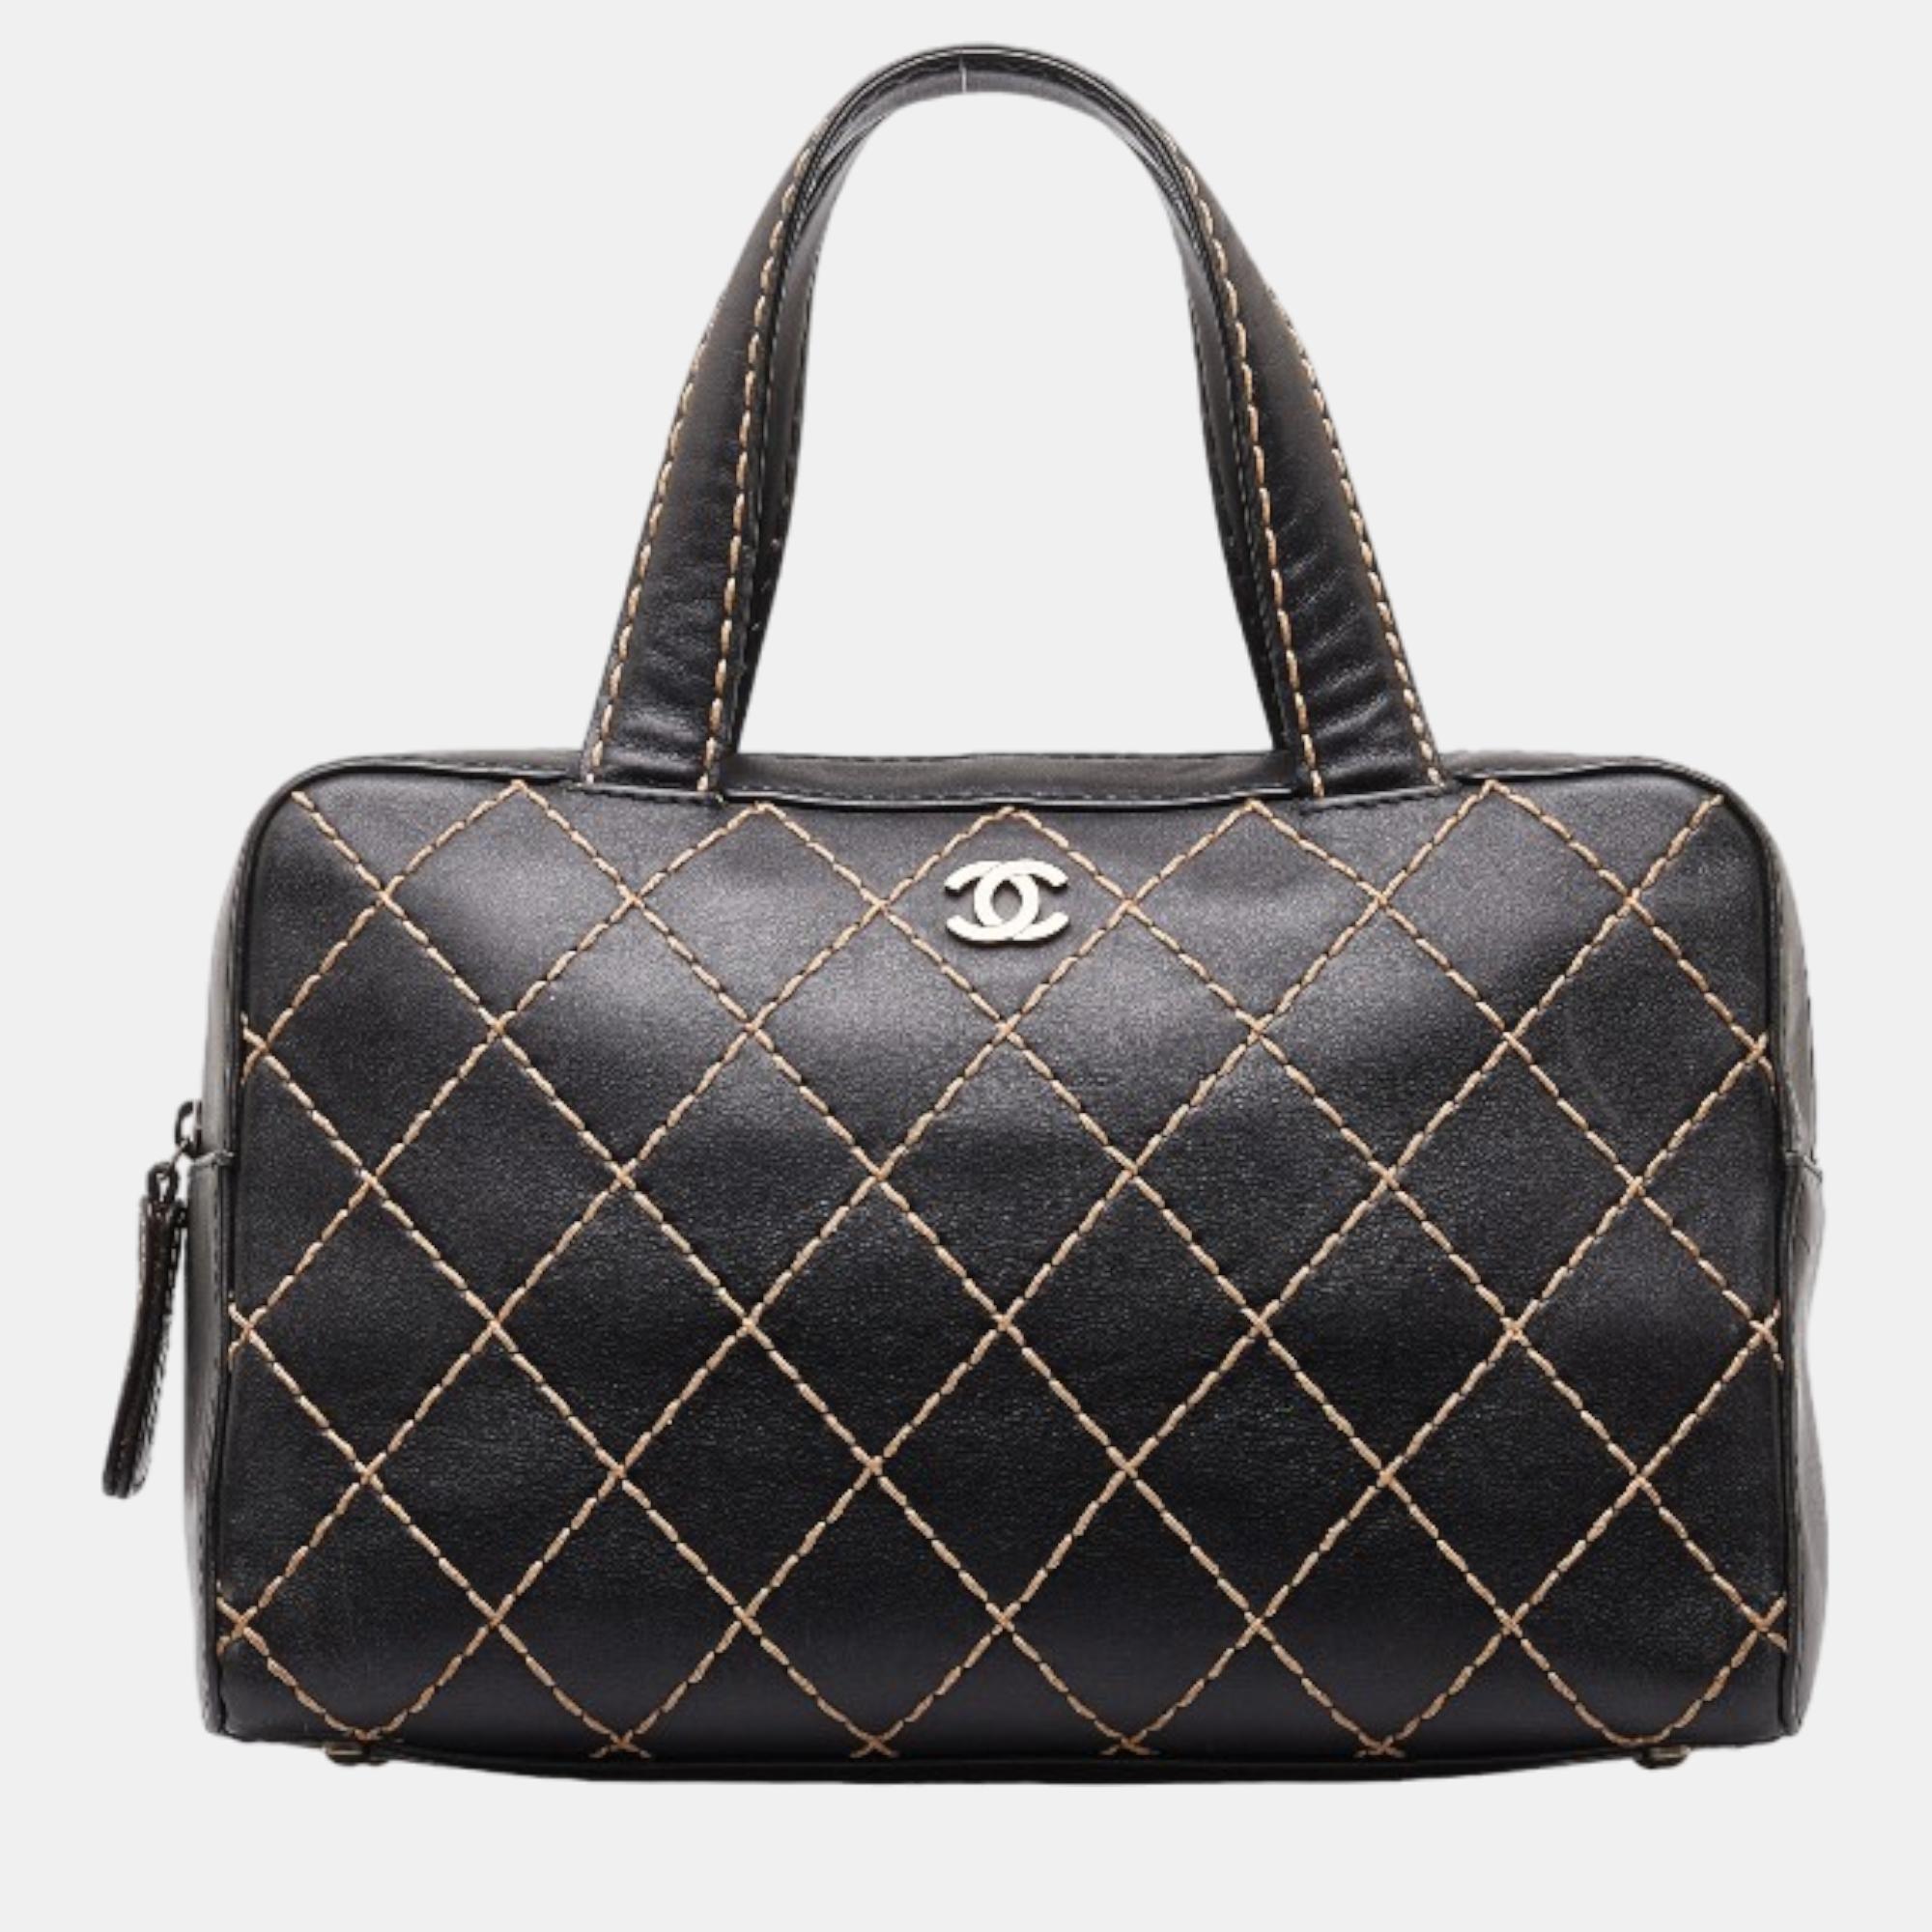 Chanel black leather wild stitch tote bag